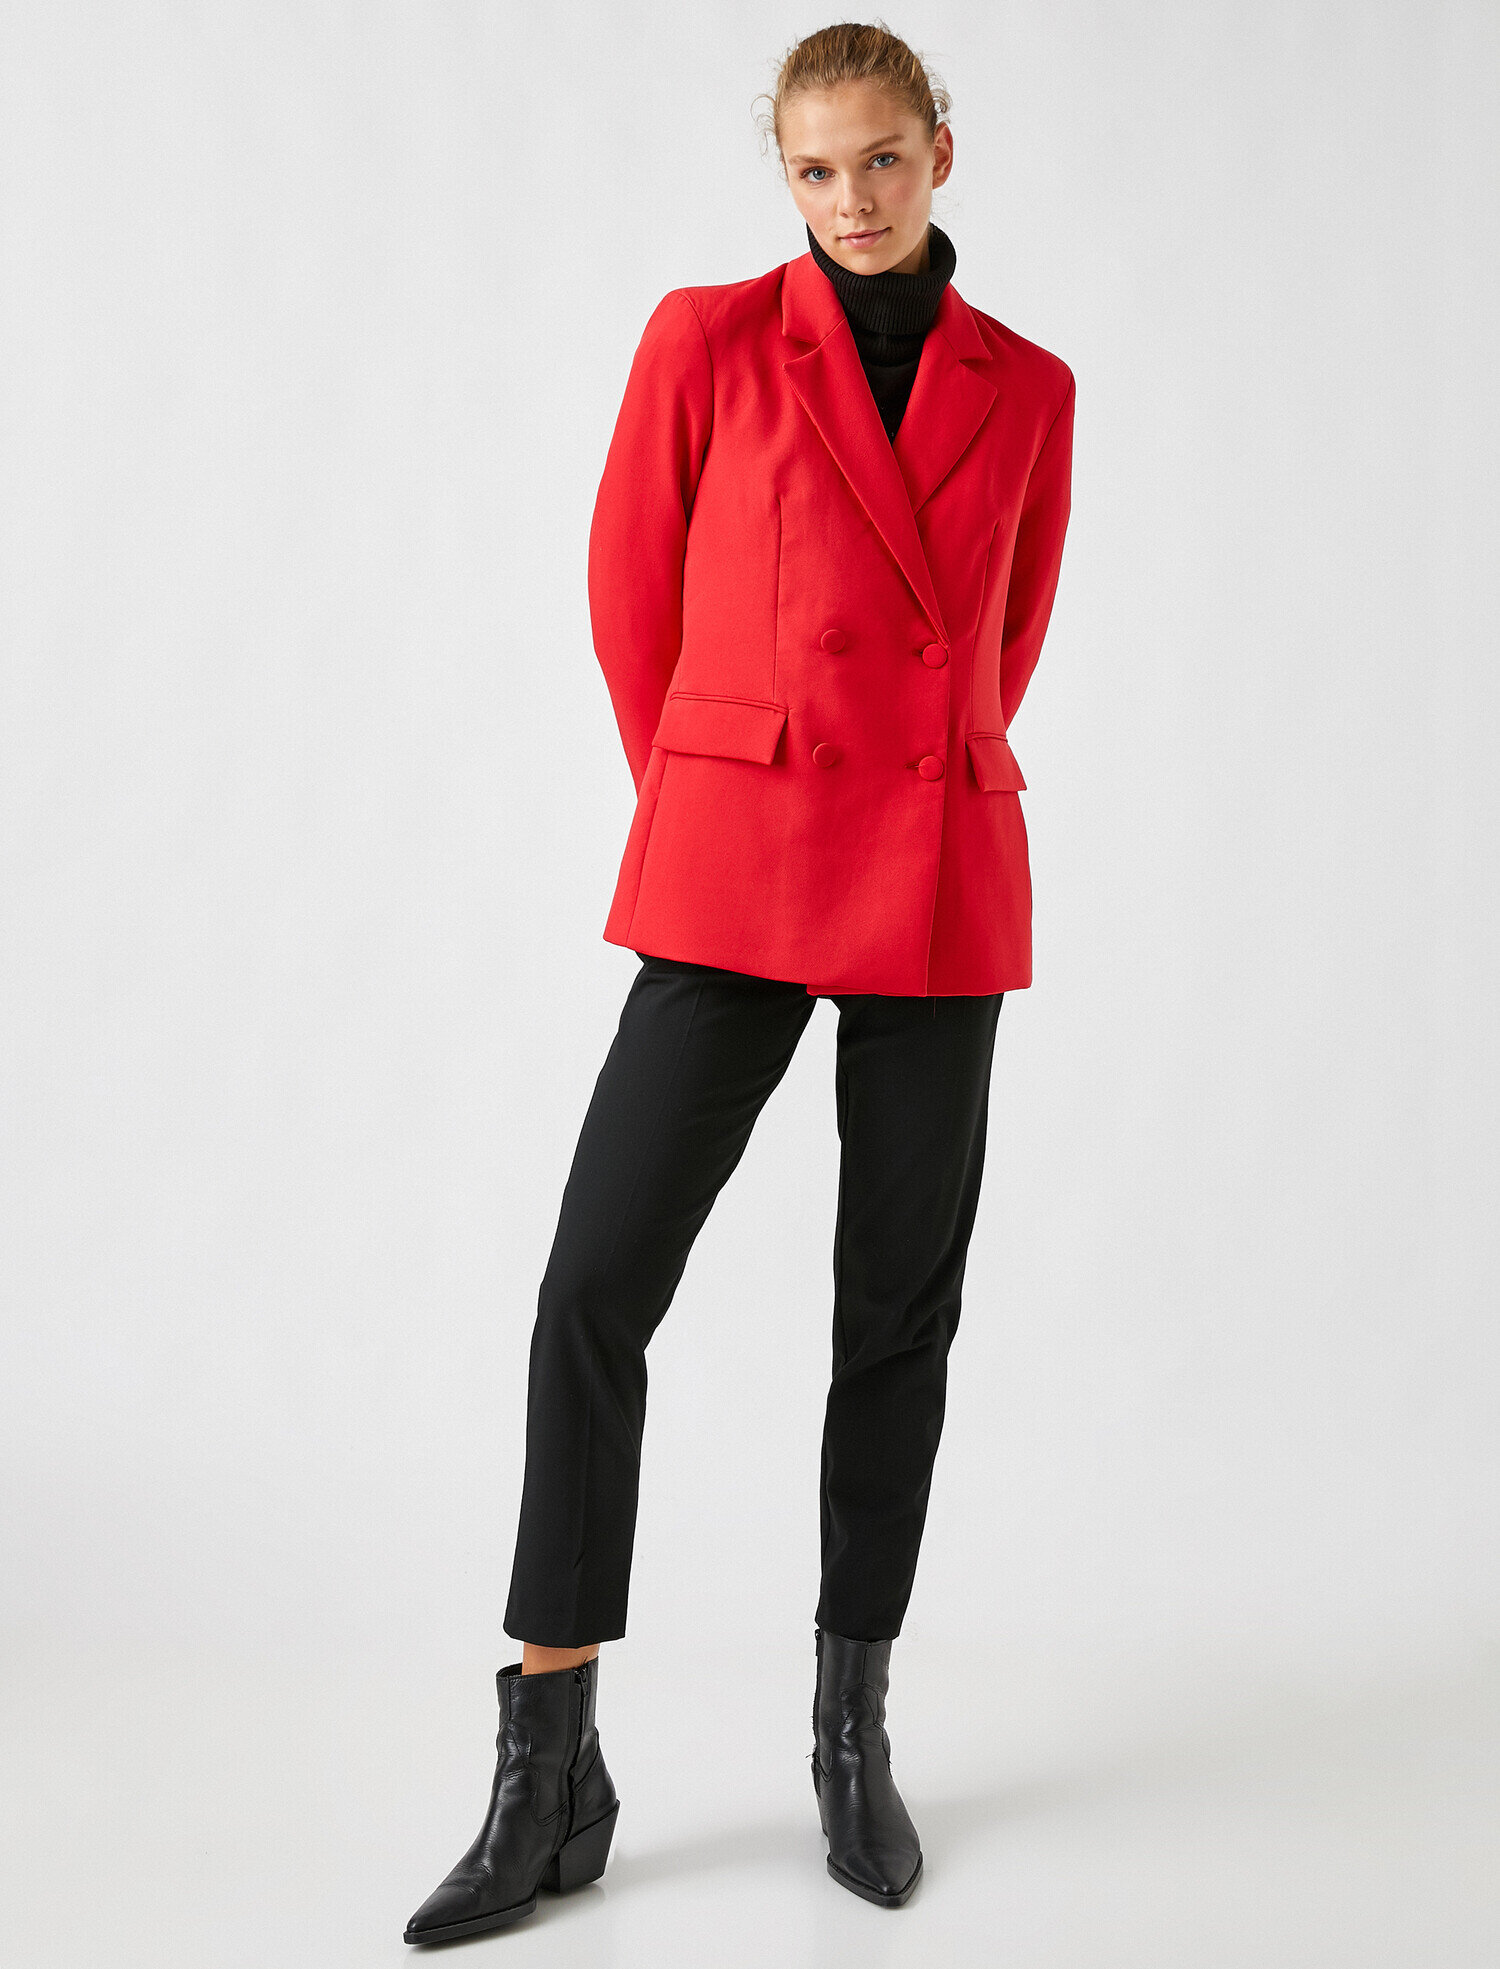 discount 71% Red XXL Zara jacket WOMEN FASHION Jackets Leatherette 